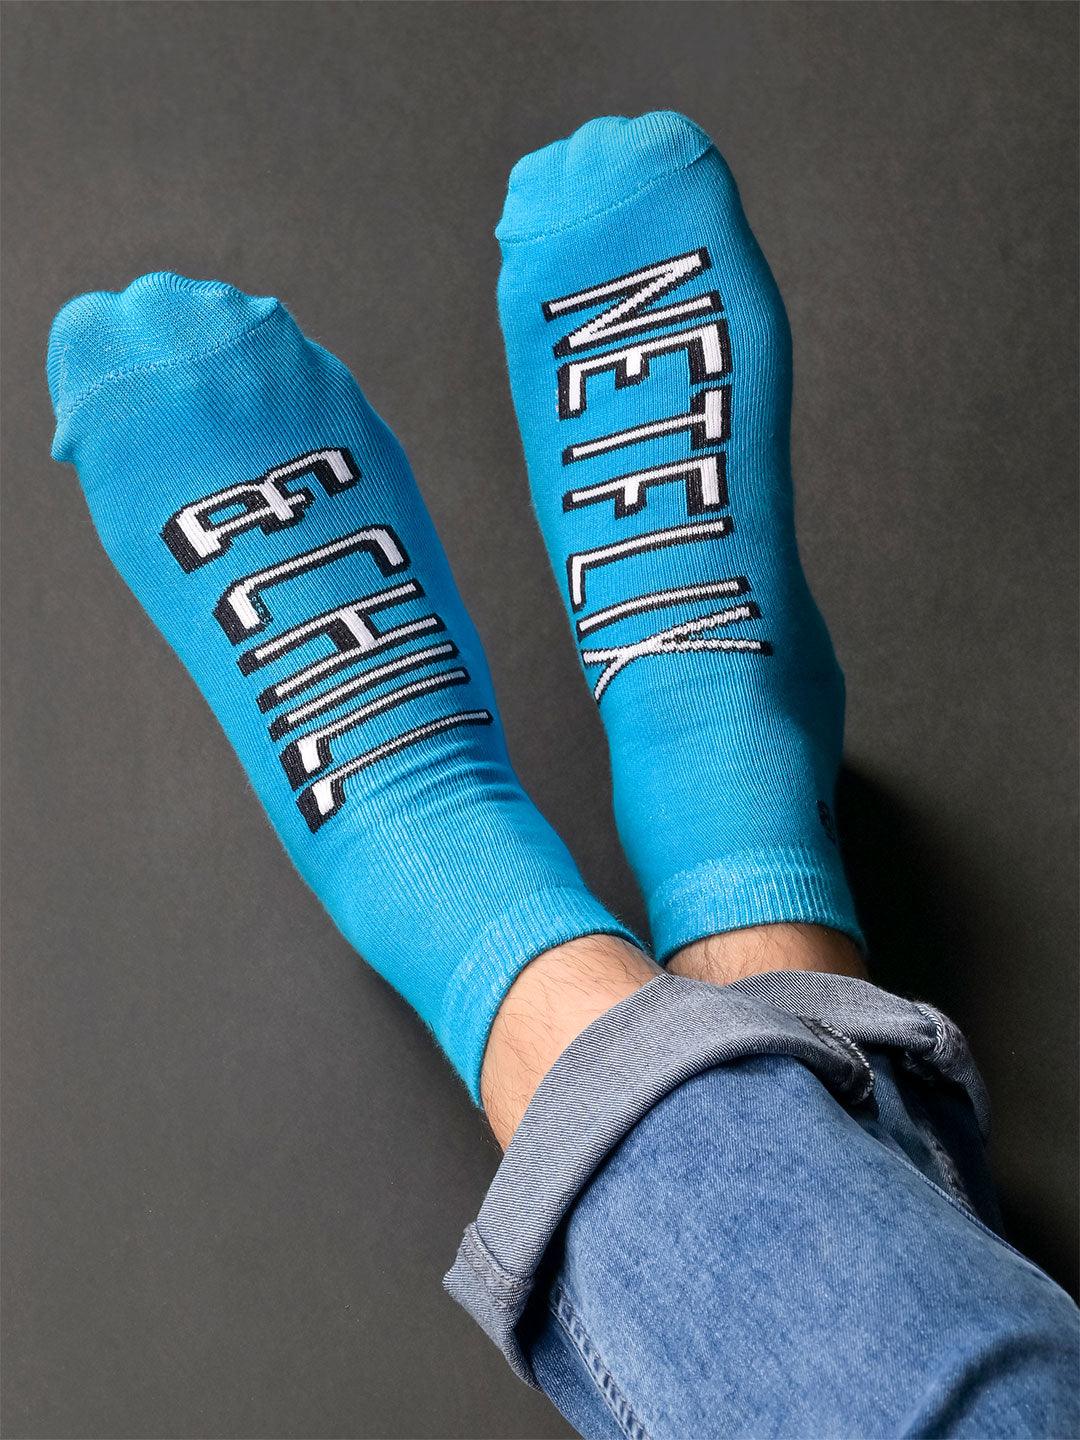 Blue socks 